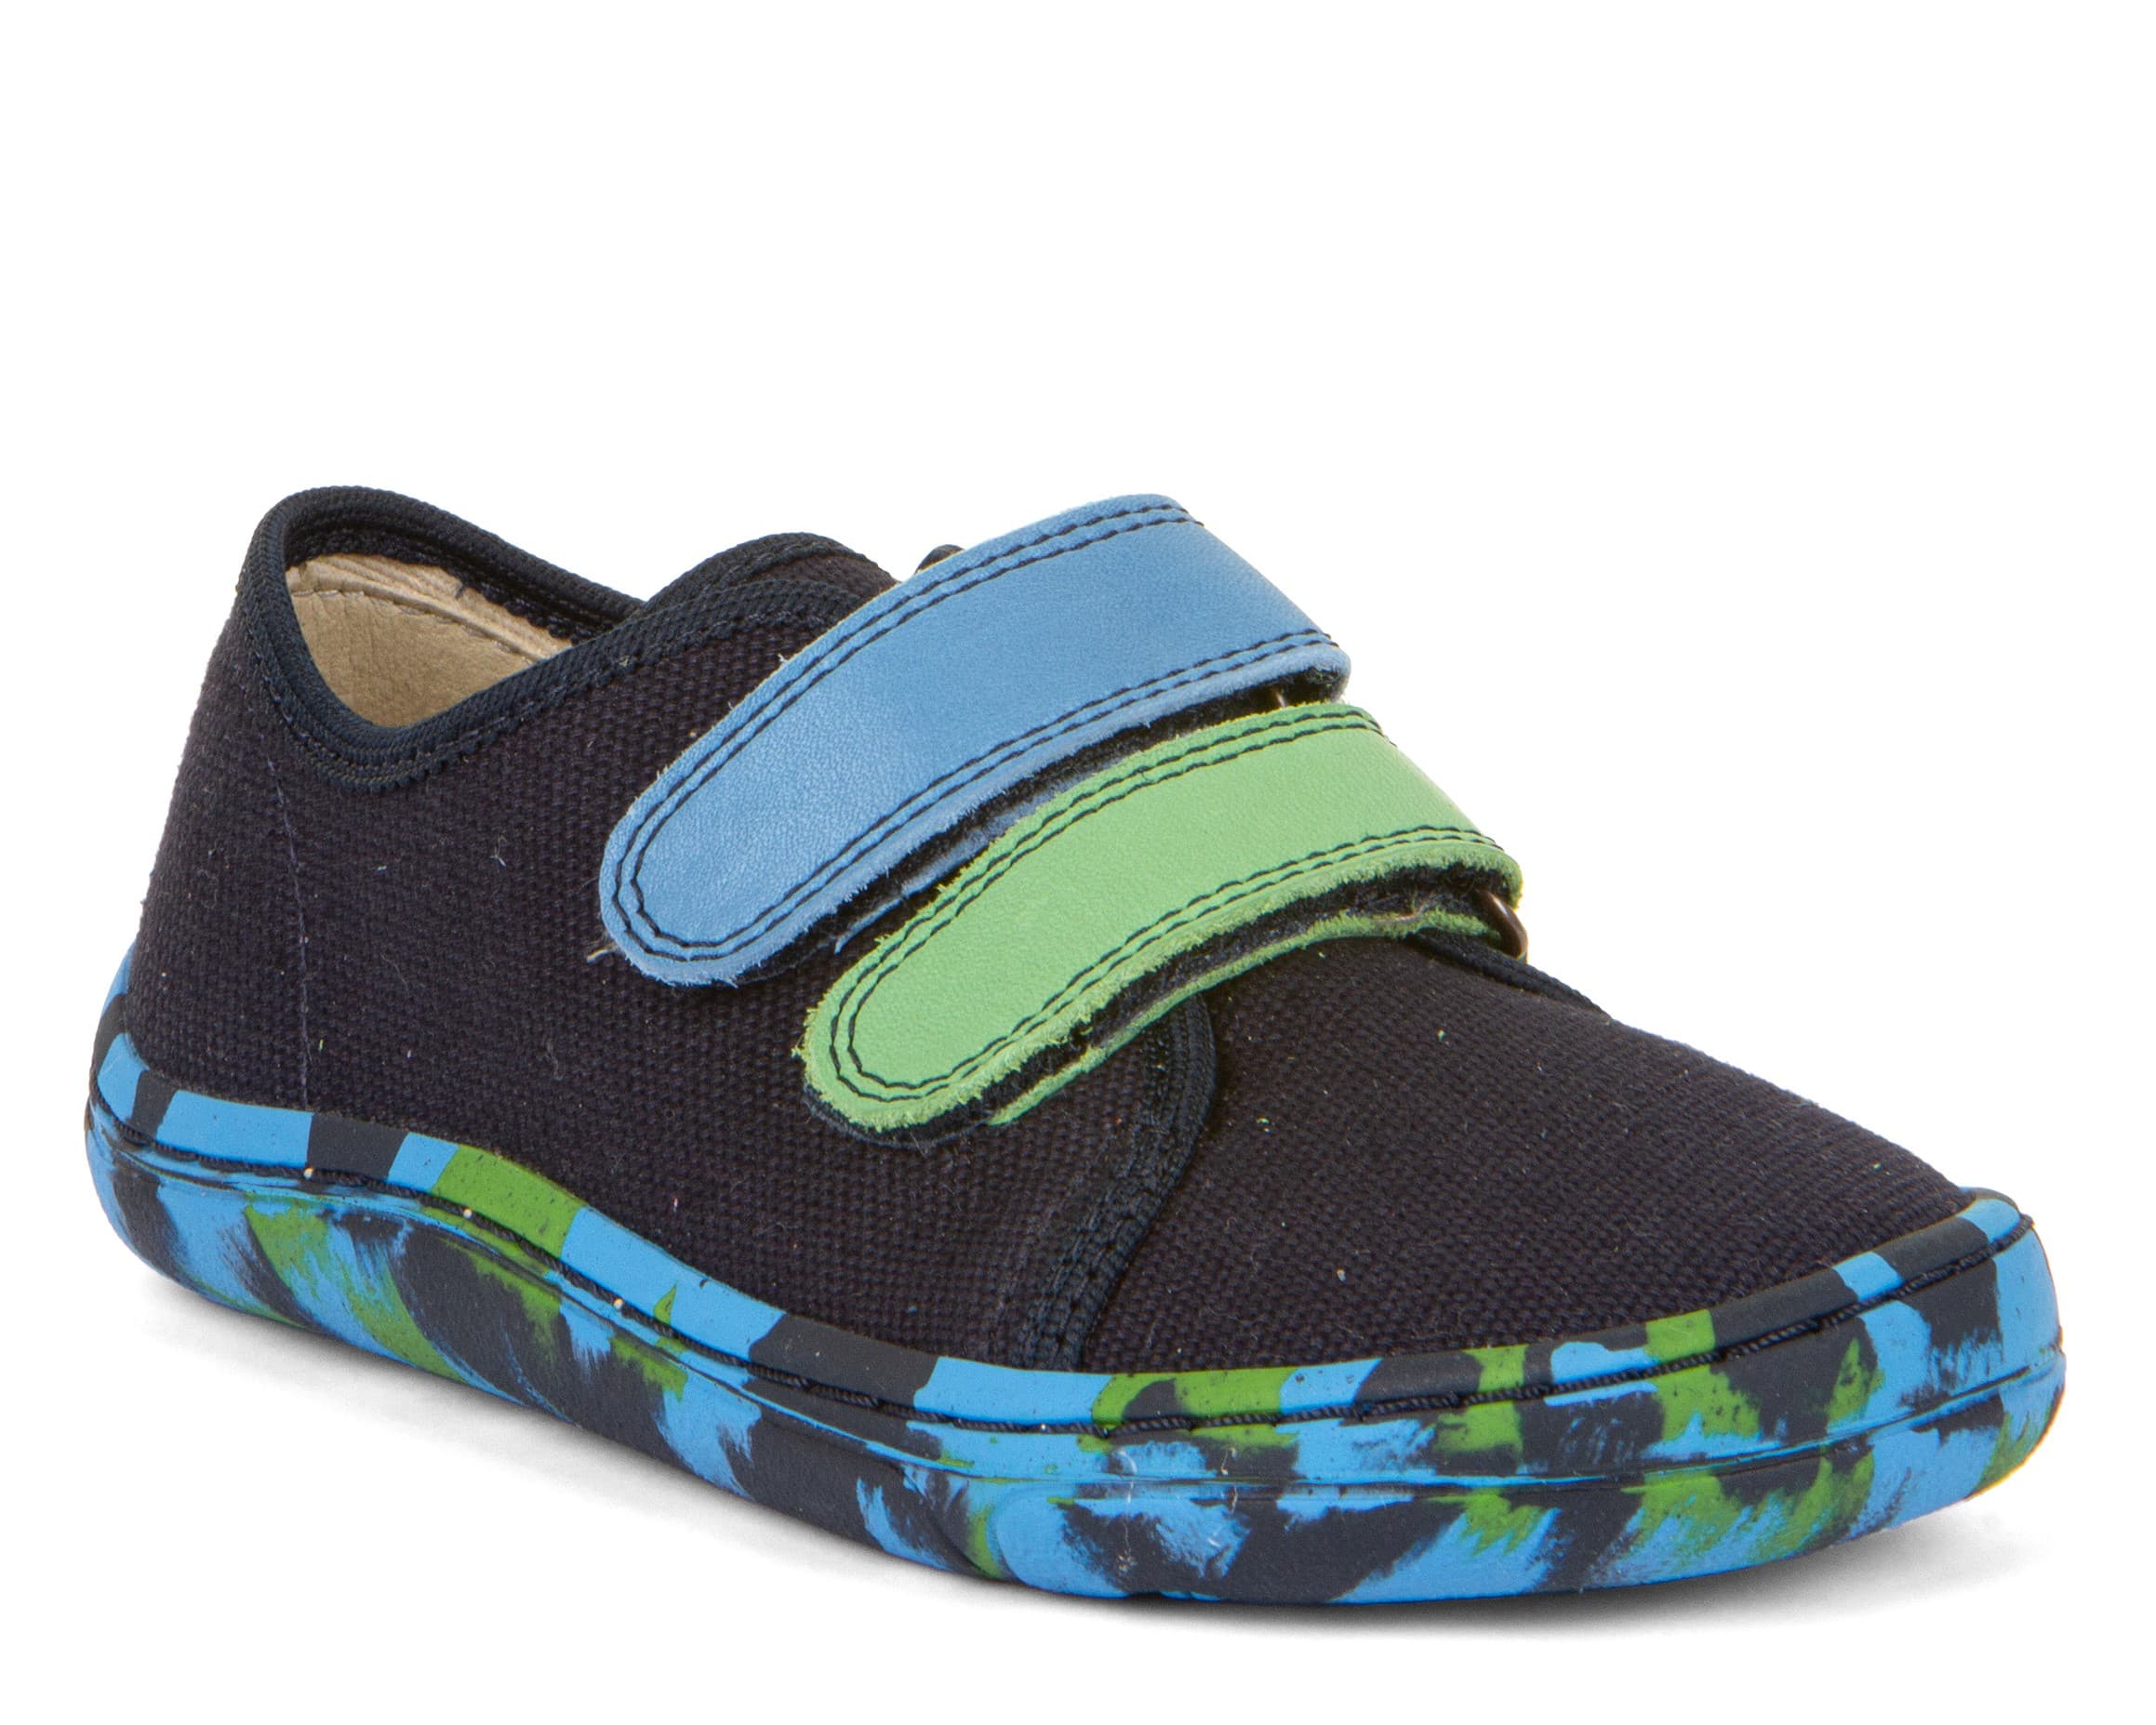 Barefoot tenisky Froddo Blue-Green textilní G1700379-13 Velikost: 35